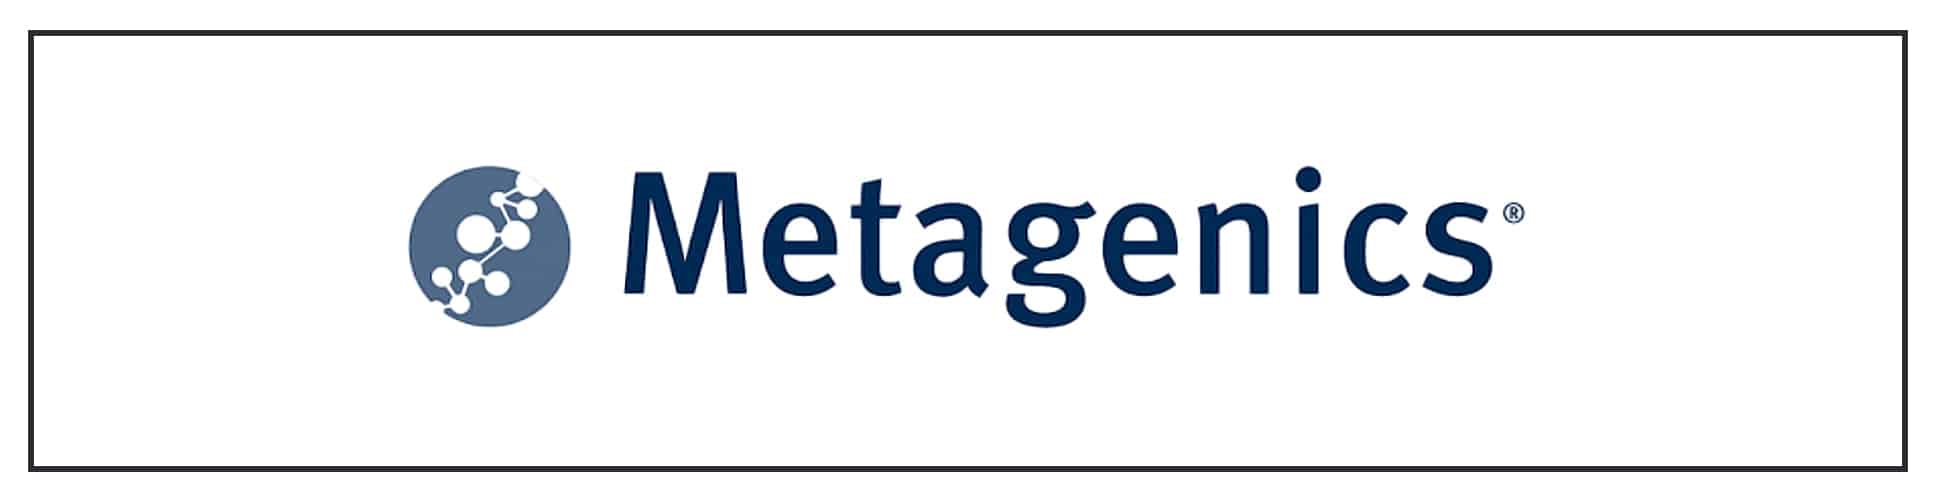 Metagenics logo on a white background.